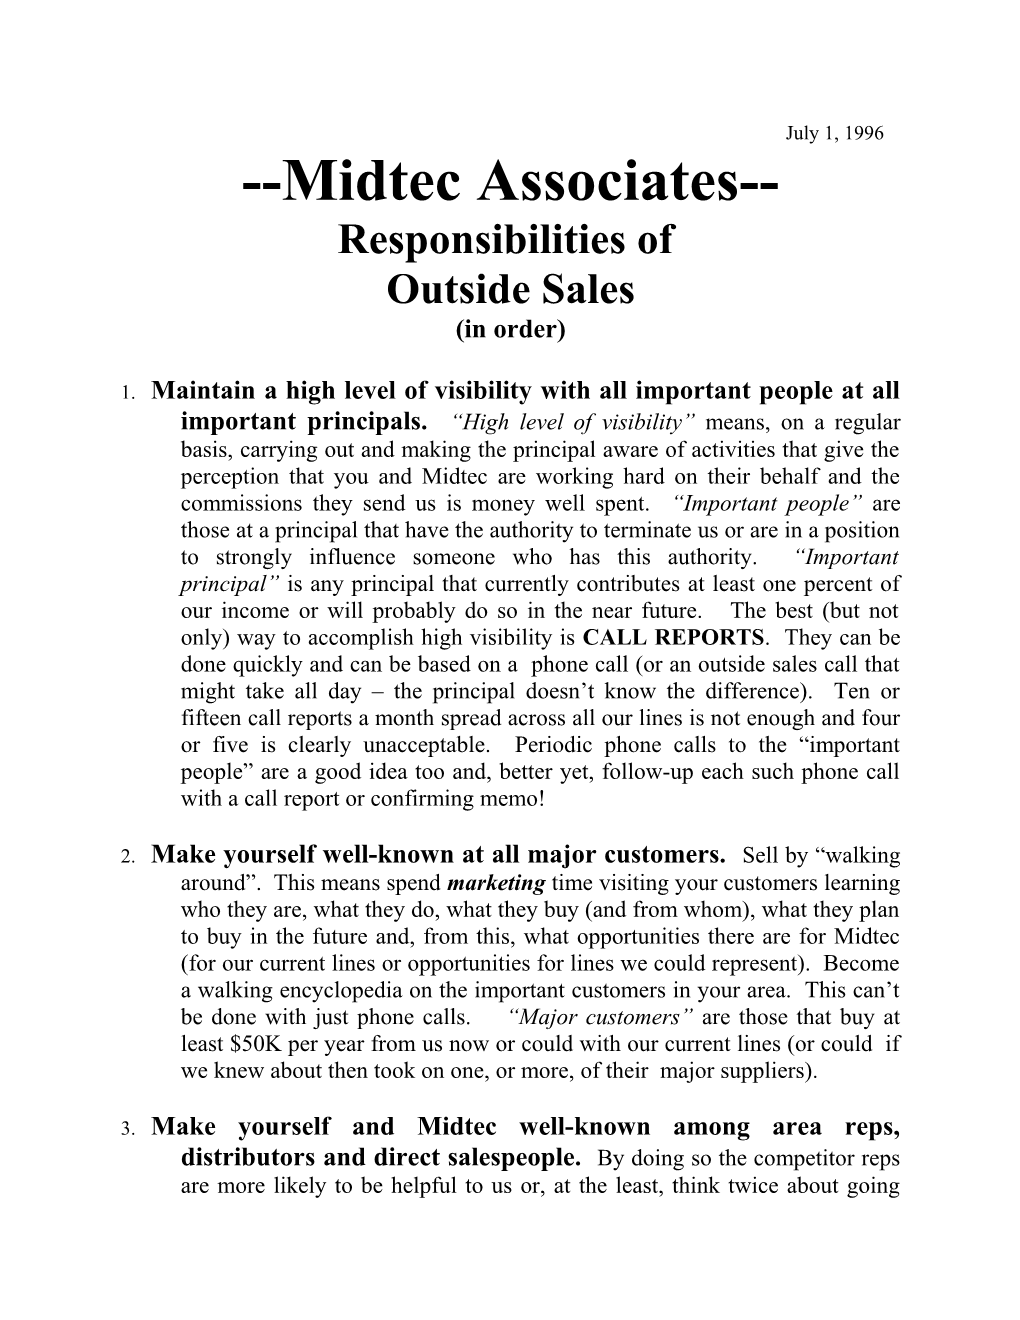 Midtec Associates